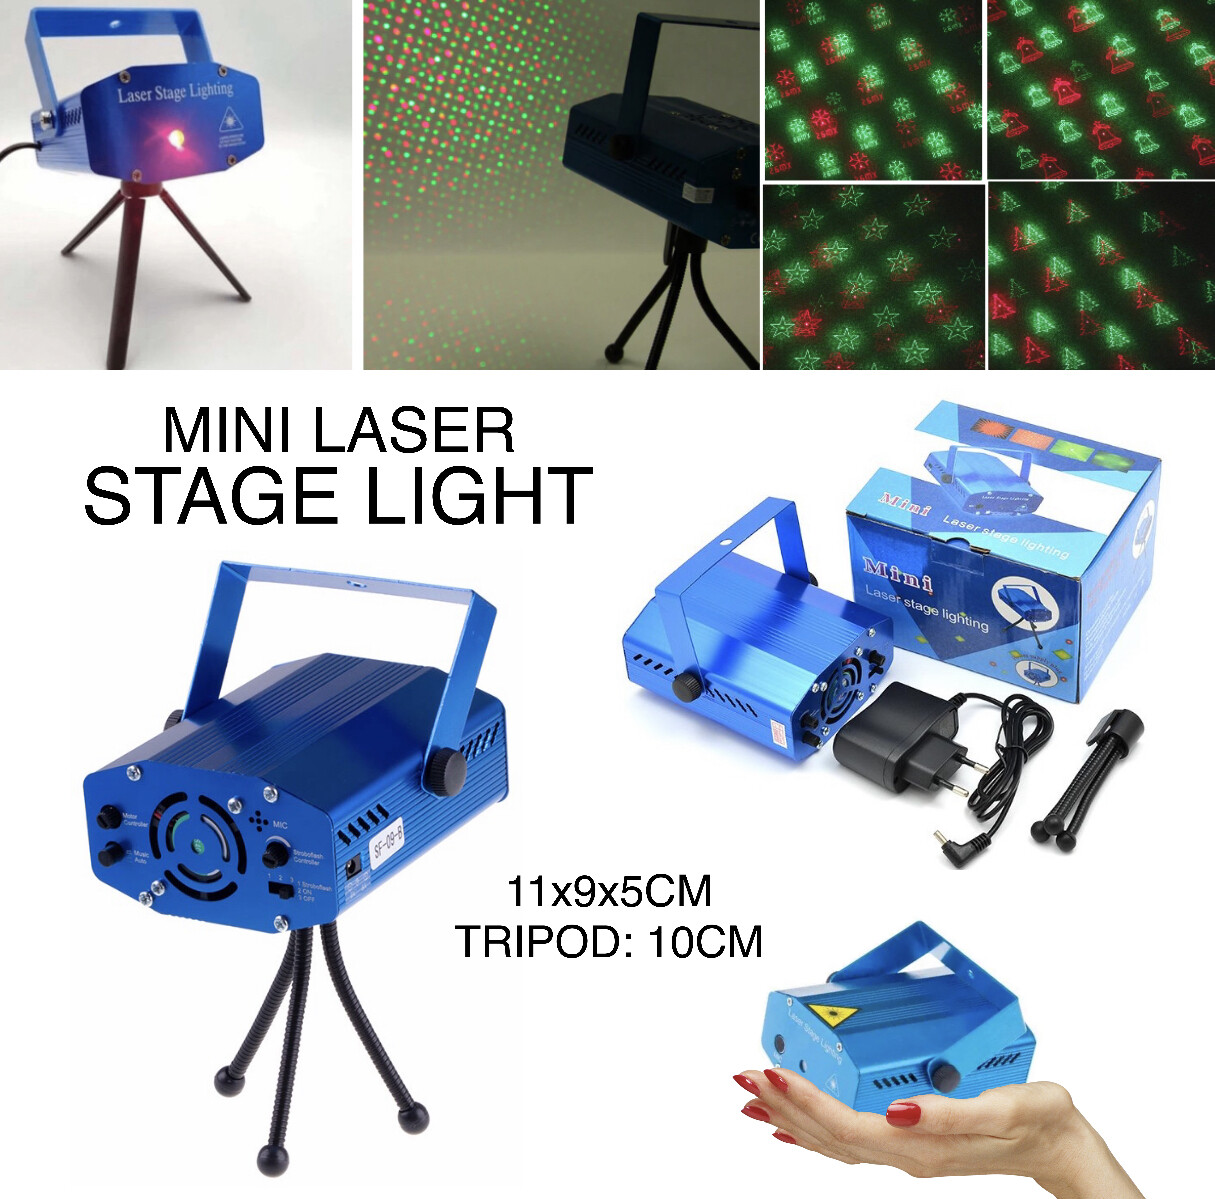 Mini Laser Stage Light